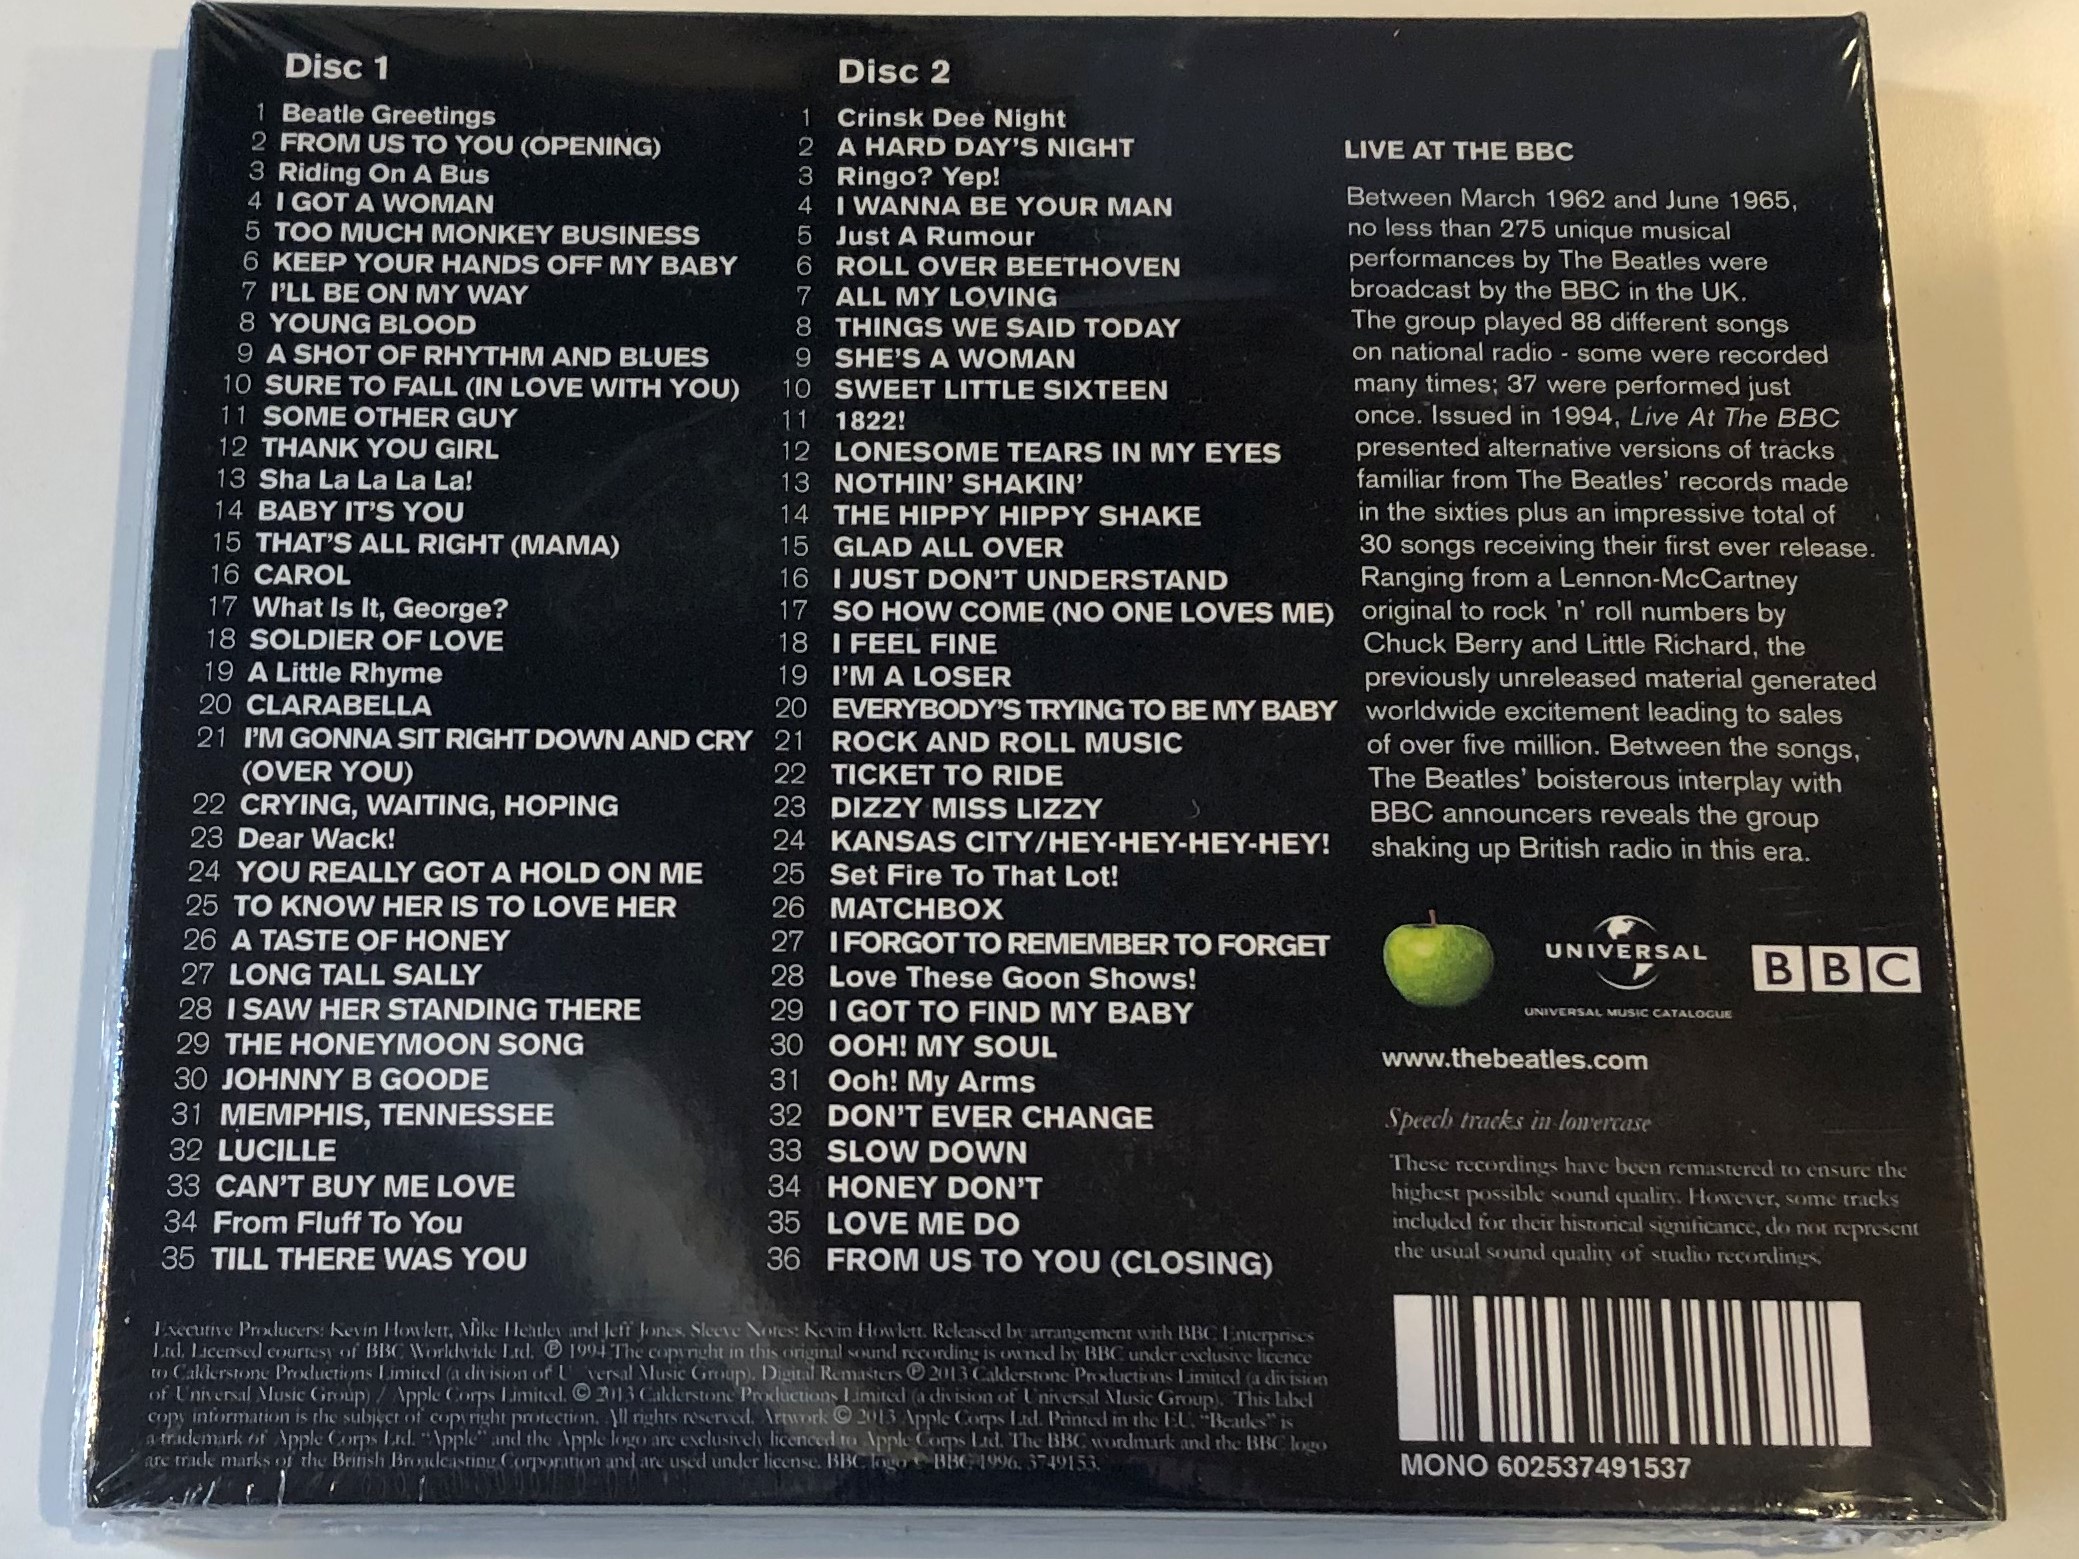 the-beatles-live-at-the-bbc-british-broadcasting-corporation-apple-records-2x-audio-cd-2013-mono-3749153-2-.jpg